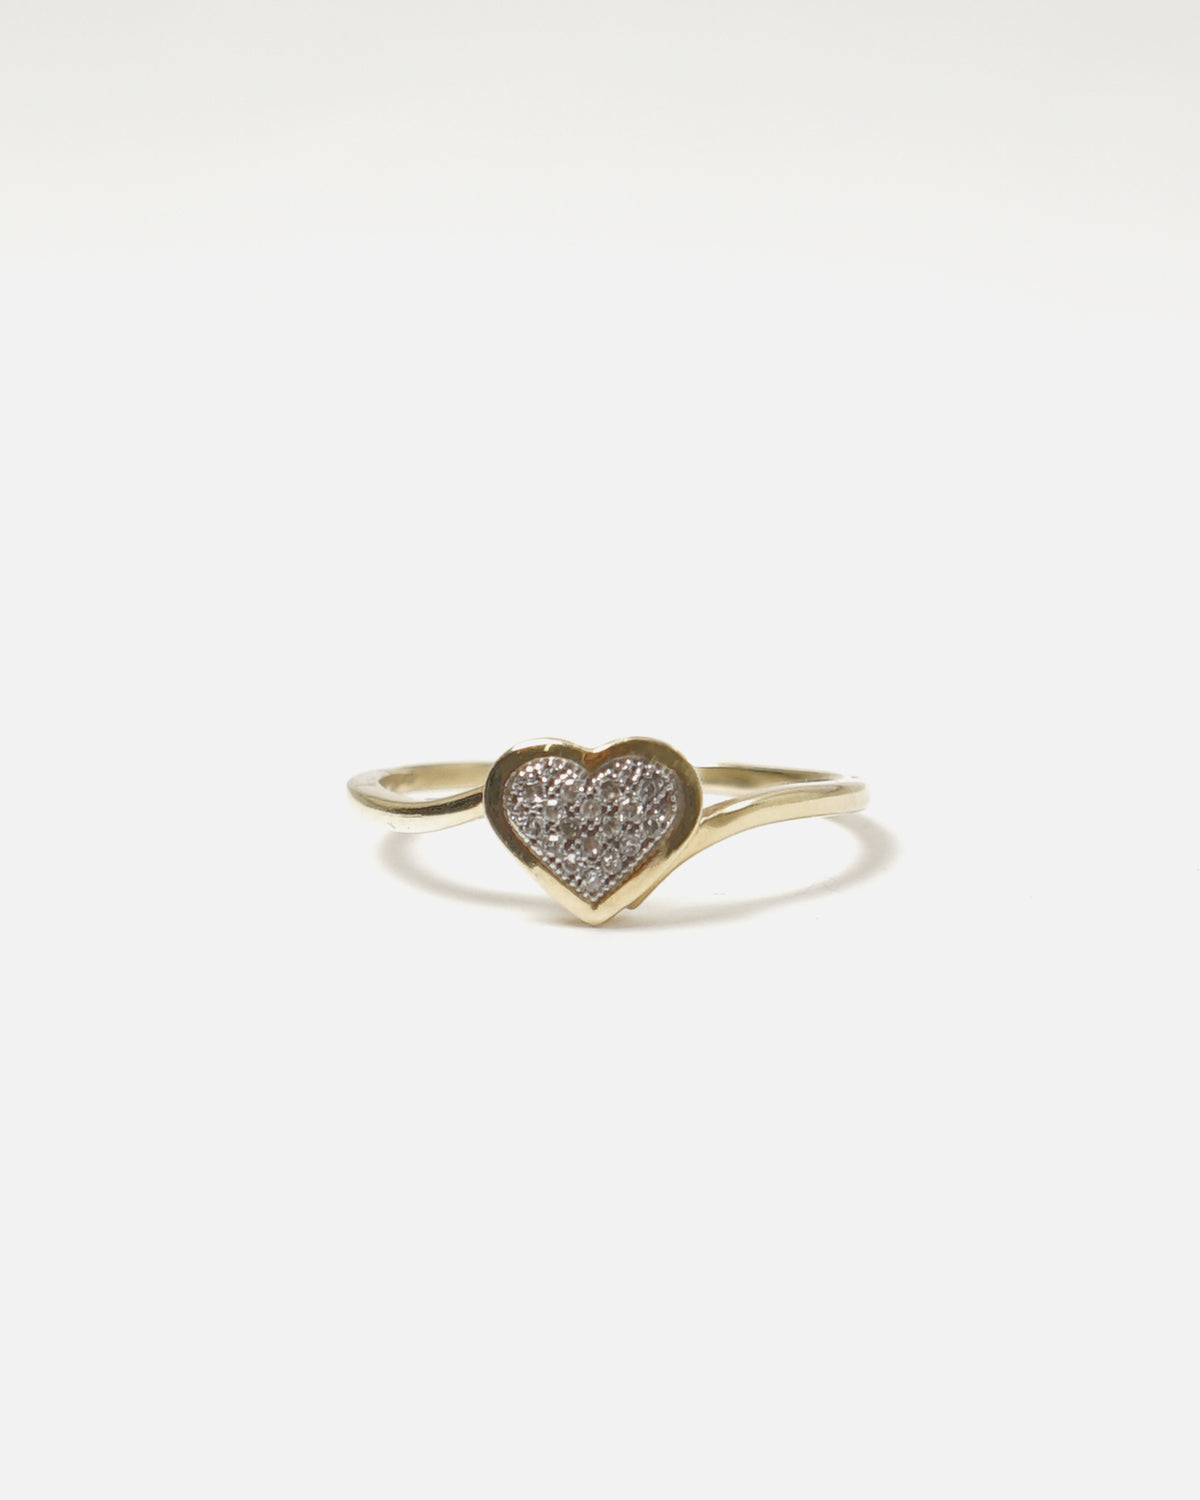 10k Gold Heart Ring w/ Diamond / size: 8